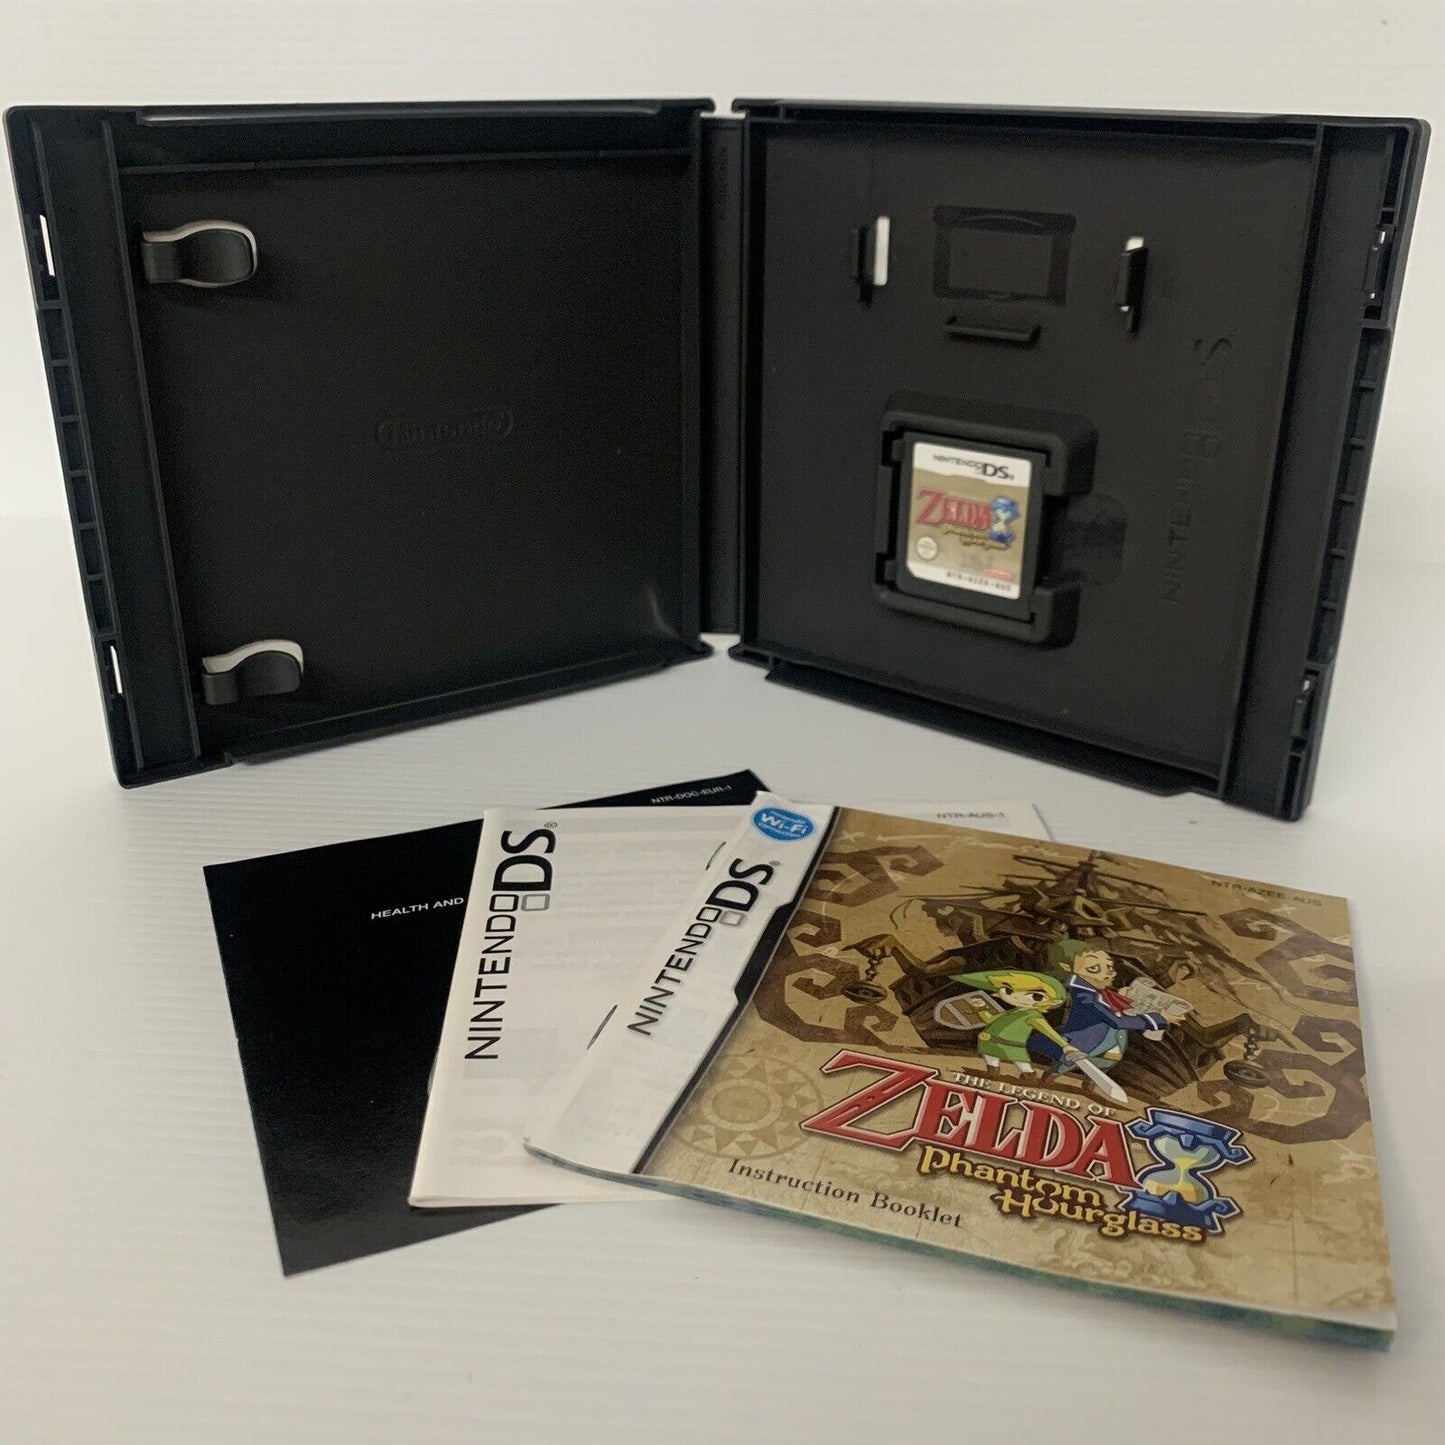 Legend of Zelda Phantom Hourglass Game Nintendo DS